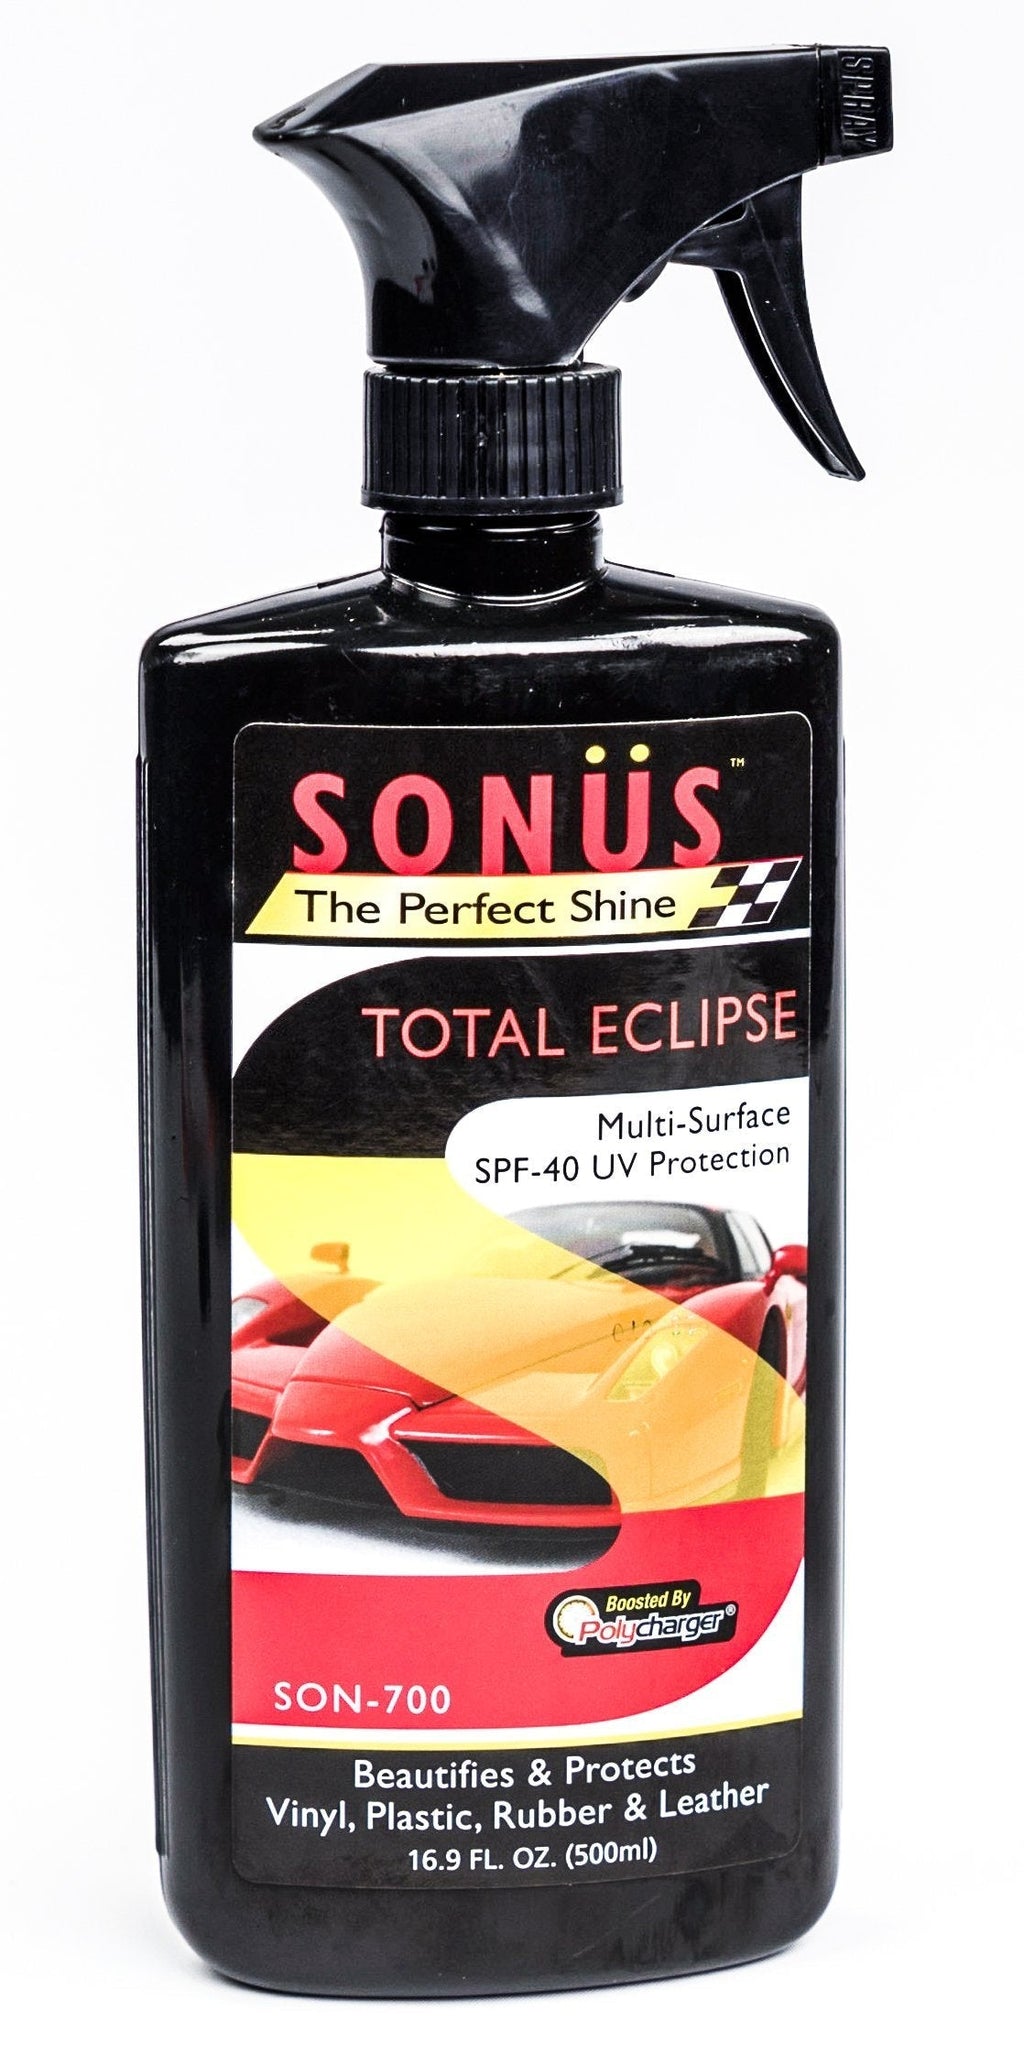  [AUSTRALIA] - Sonus SON-700 Total Eclipse Multi-Surface SPF-40 UV Protection Interior Cleaner, 16.9 Fluid_Ounces 16.9 fl. oz.